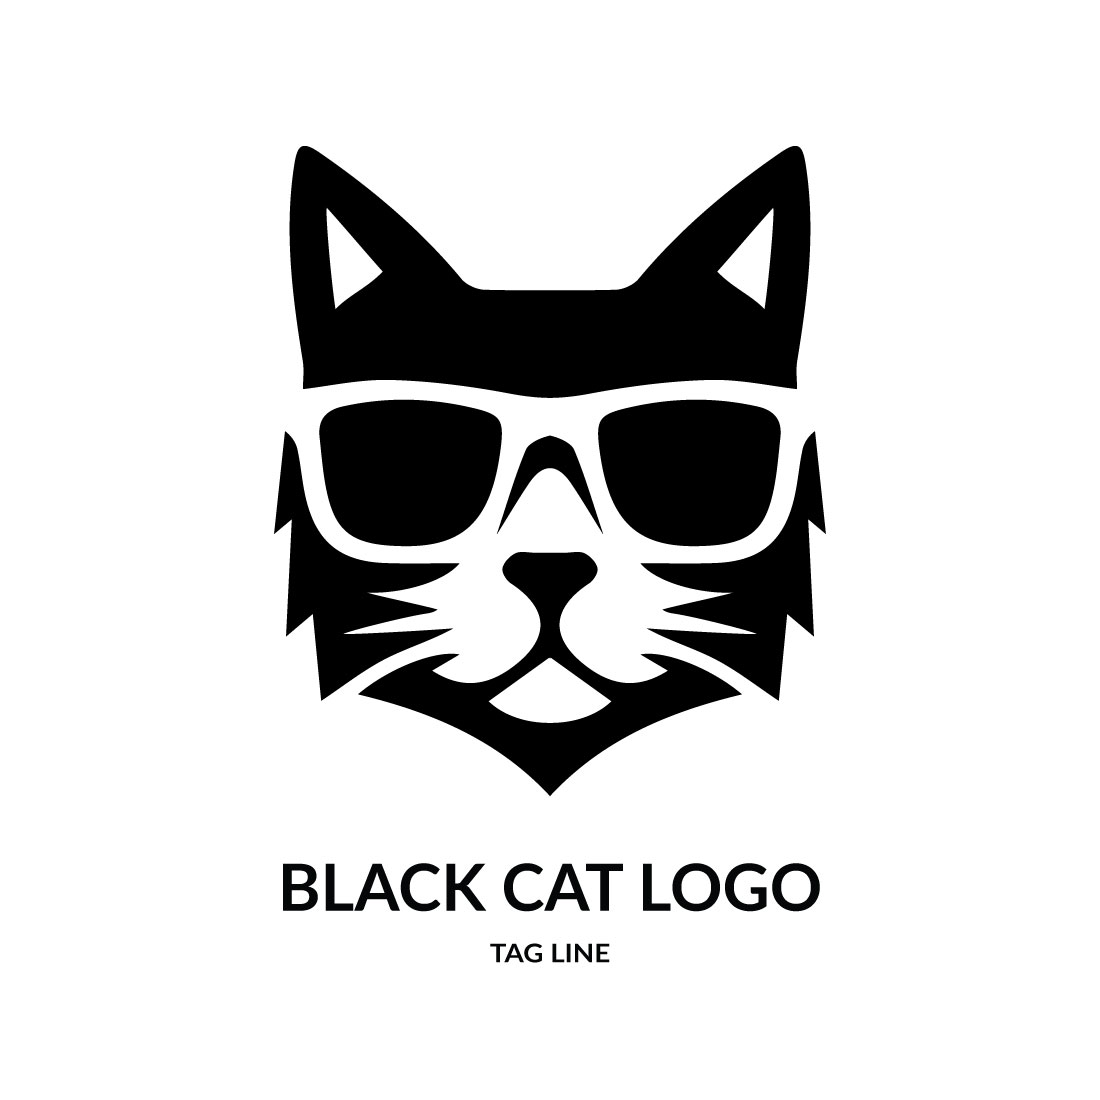 Black Cat Logo Template cover image.